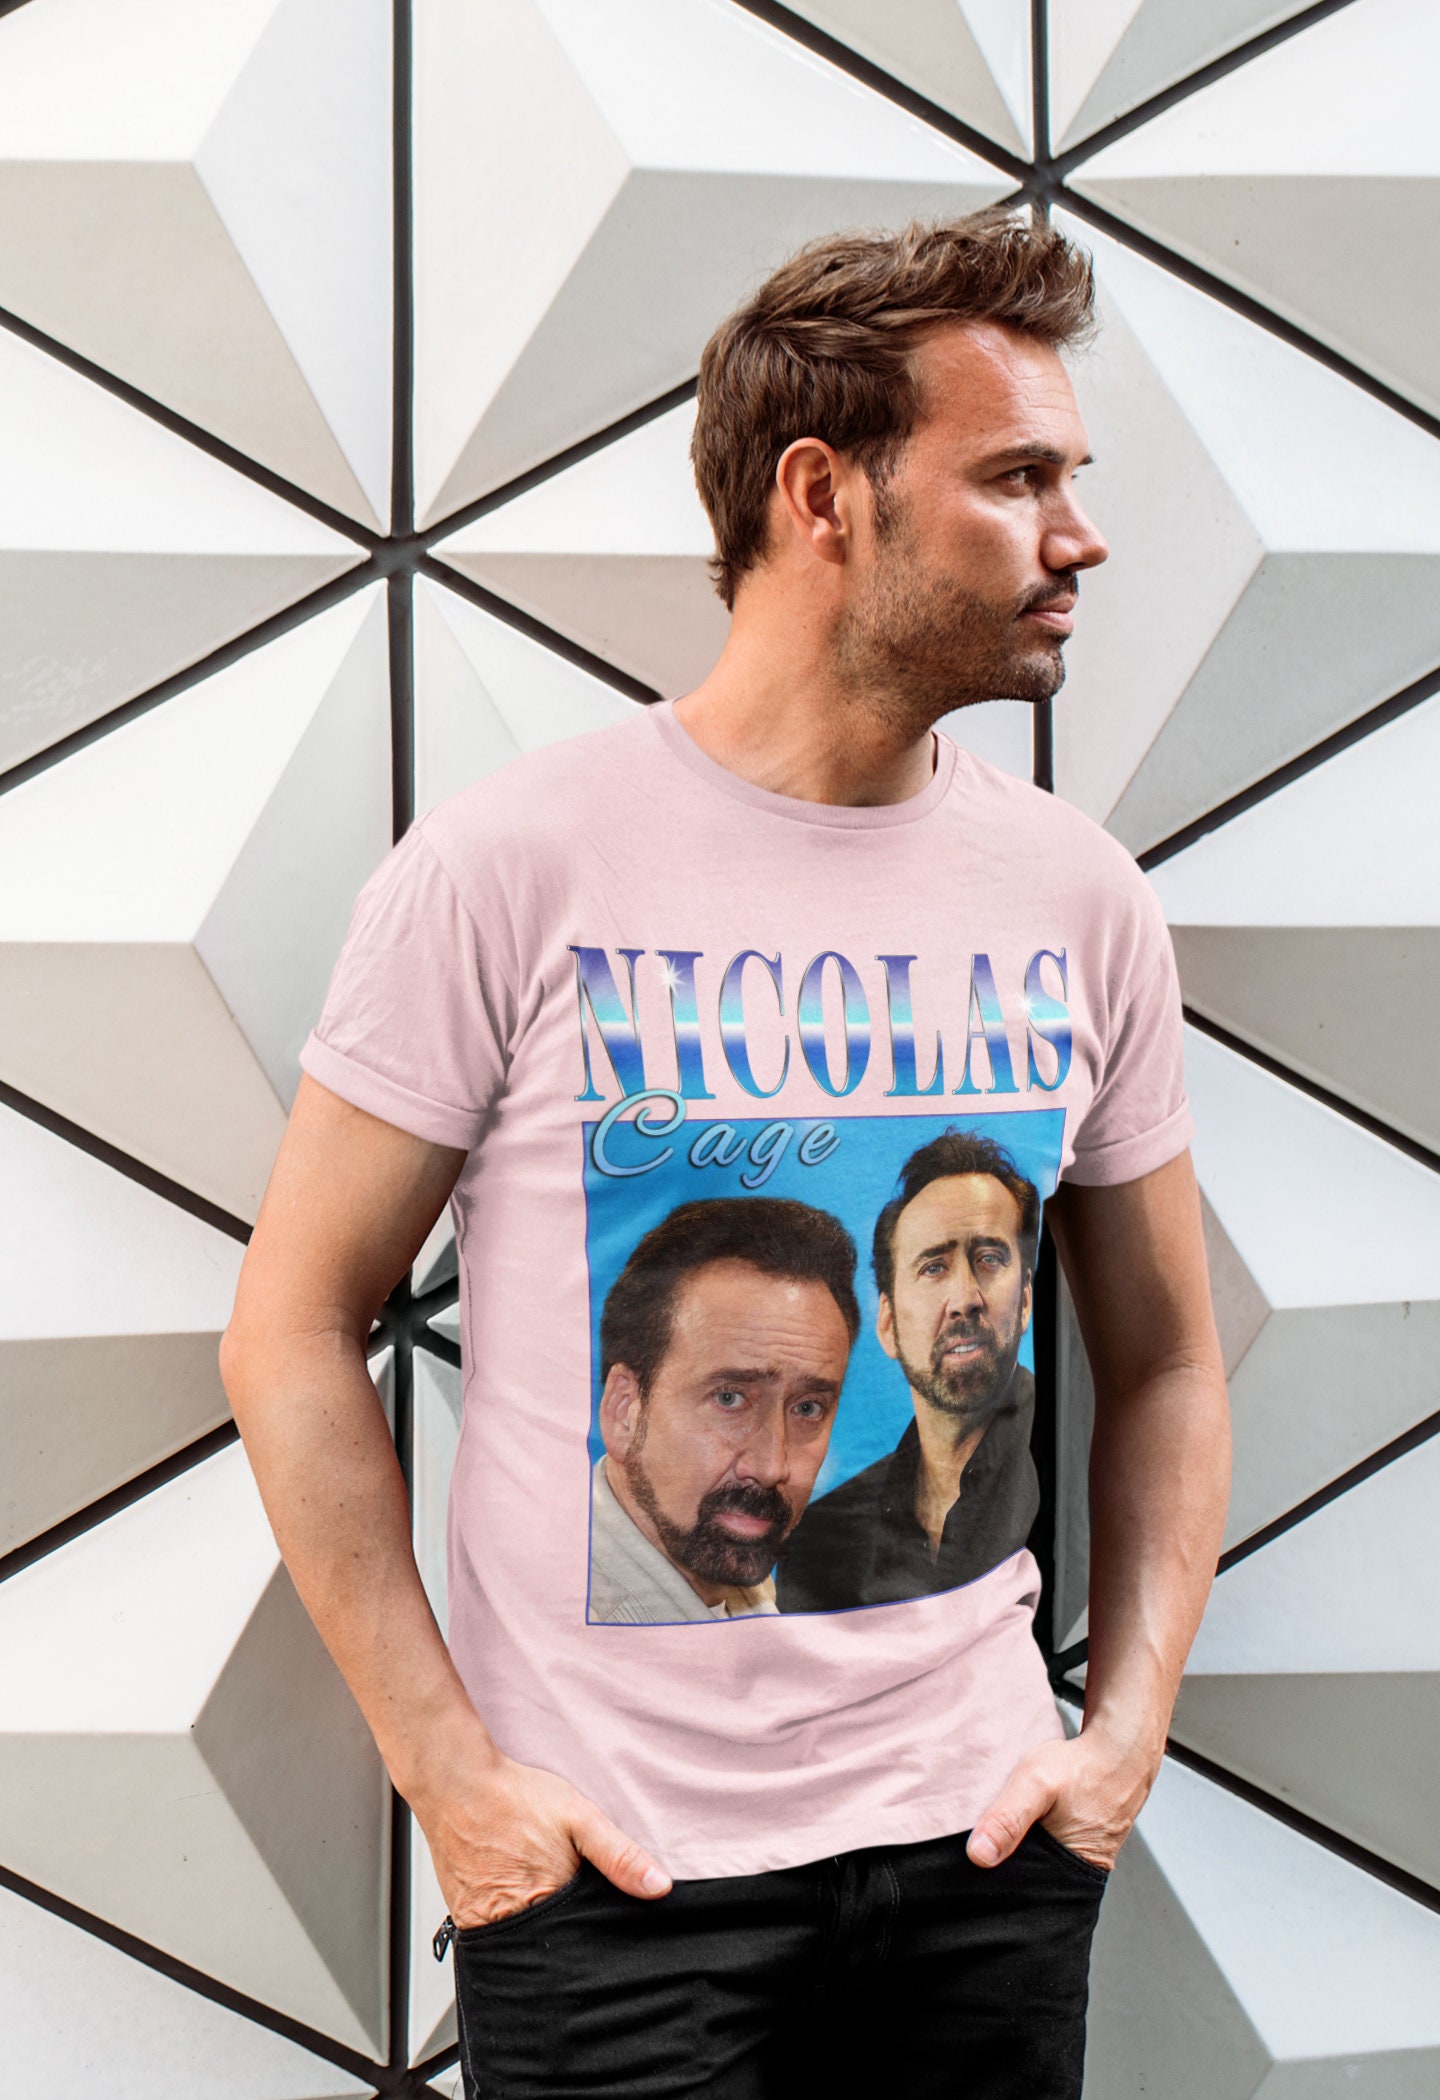 Nicolas Cage Celebrity Tee Vintage Unisex T-Shirt